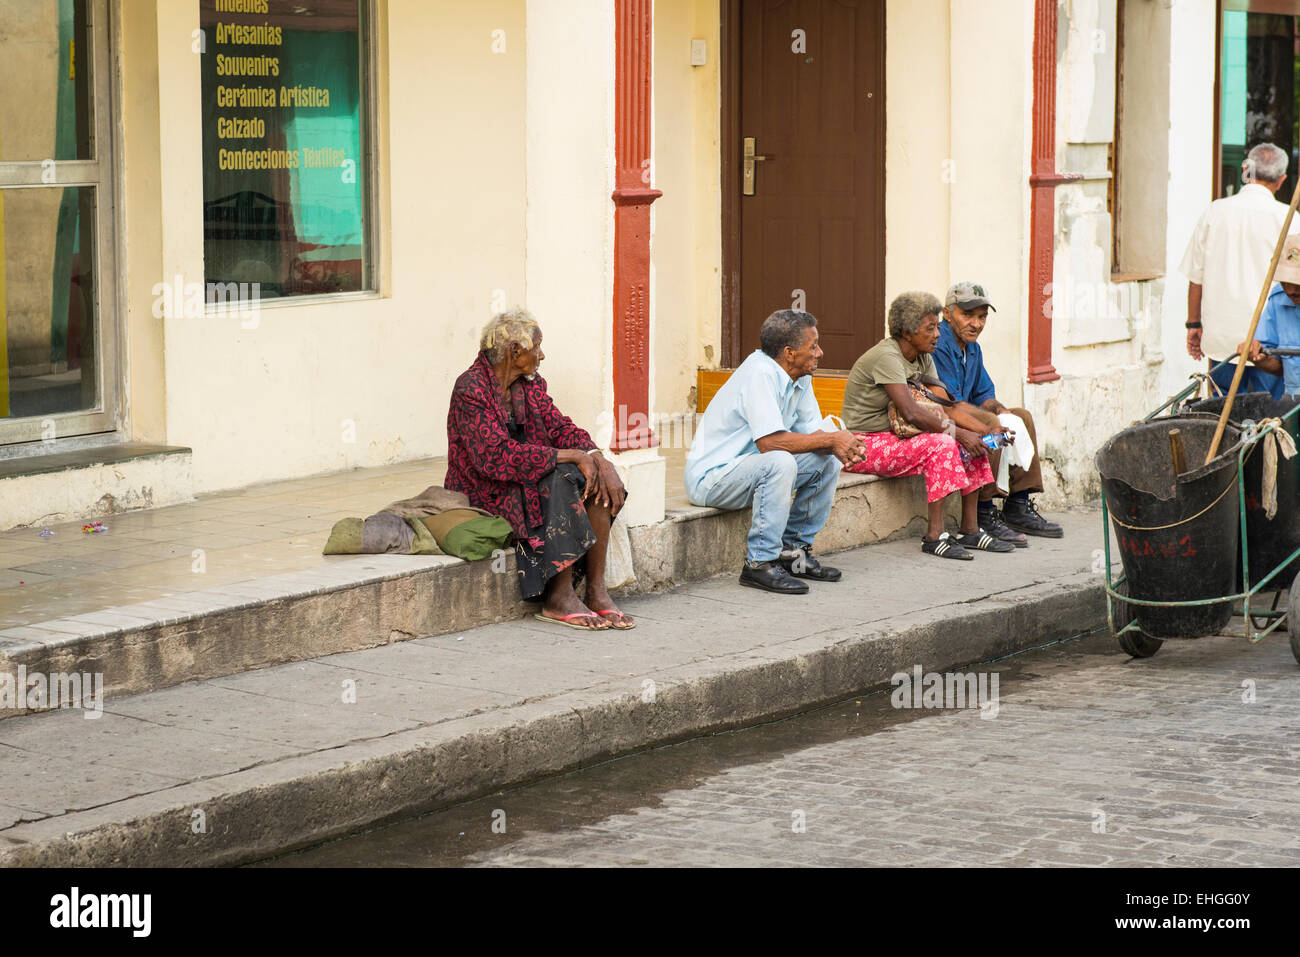 Cuba Santa Clara Street Scene Old Men Women Sitting Sit On